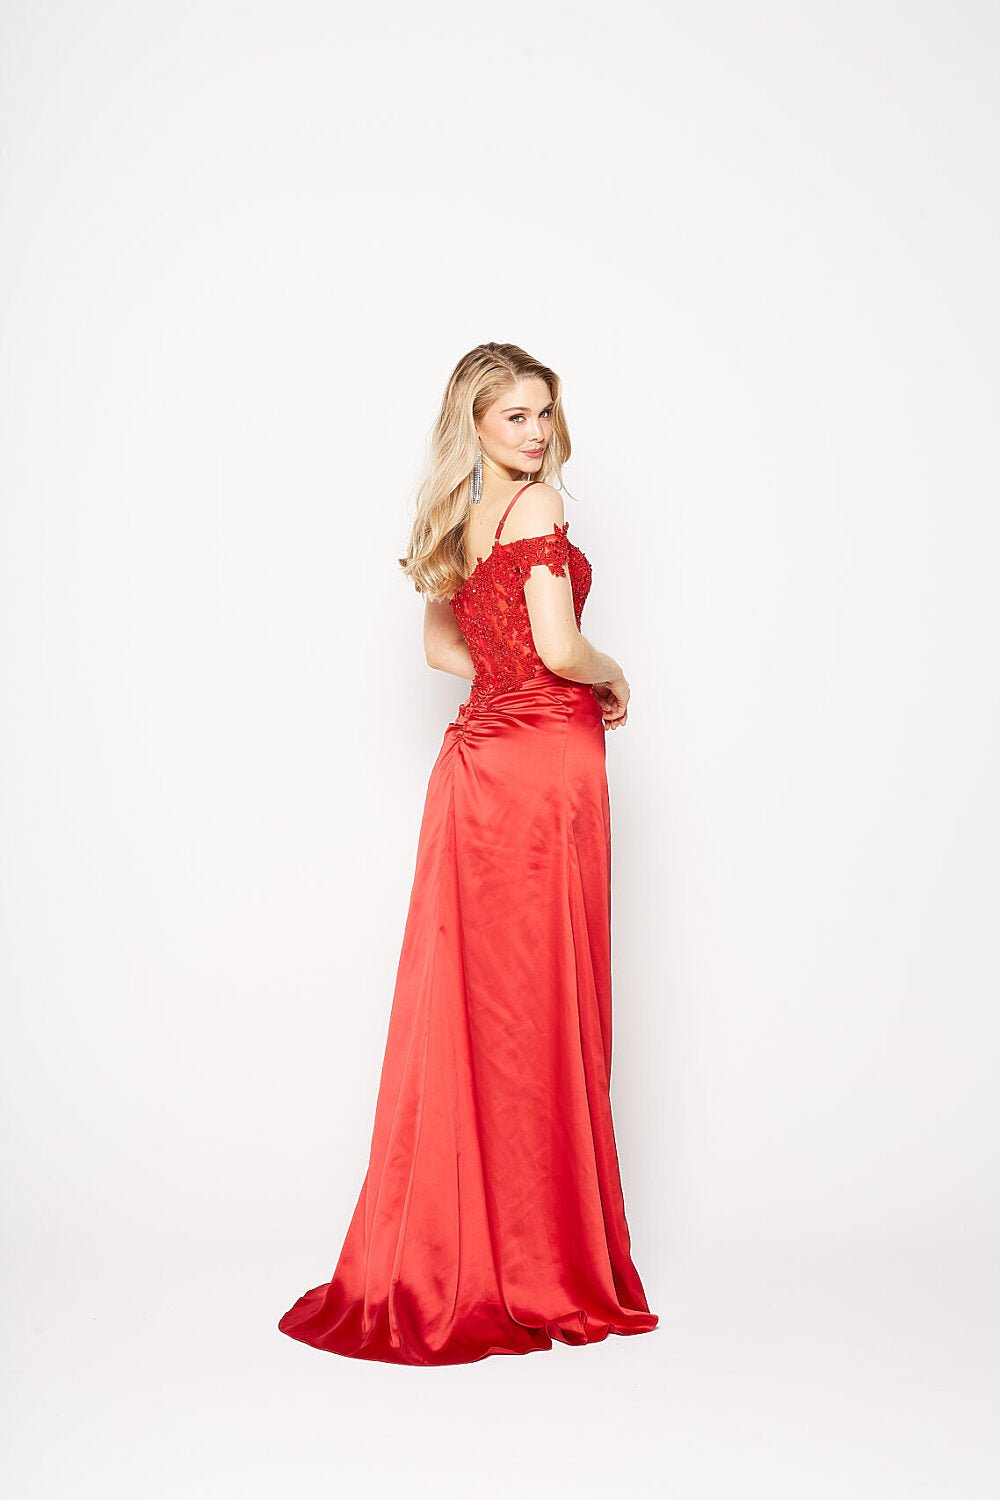 Elyssa Dress by Tania Olsen PO2320 - ElissaJay Boutique